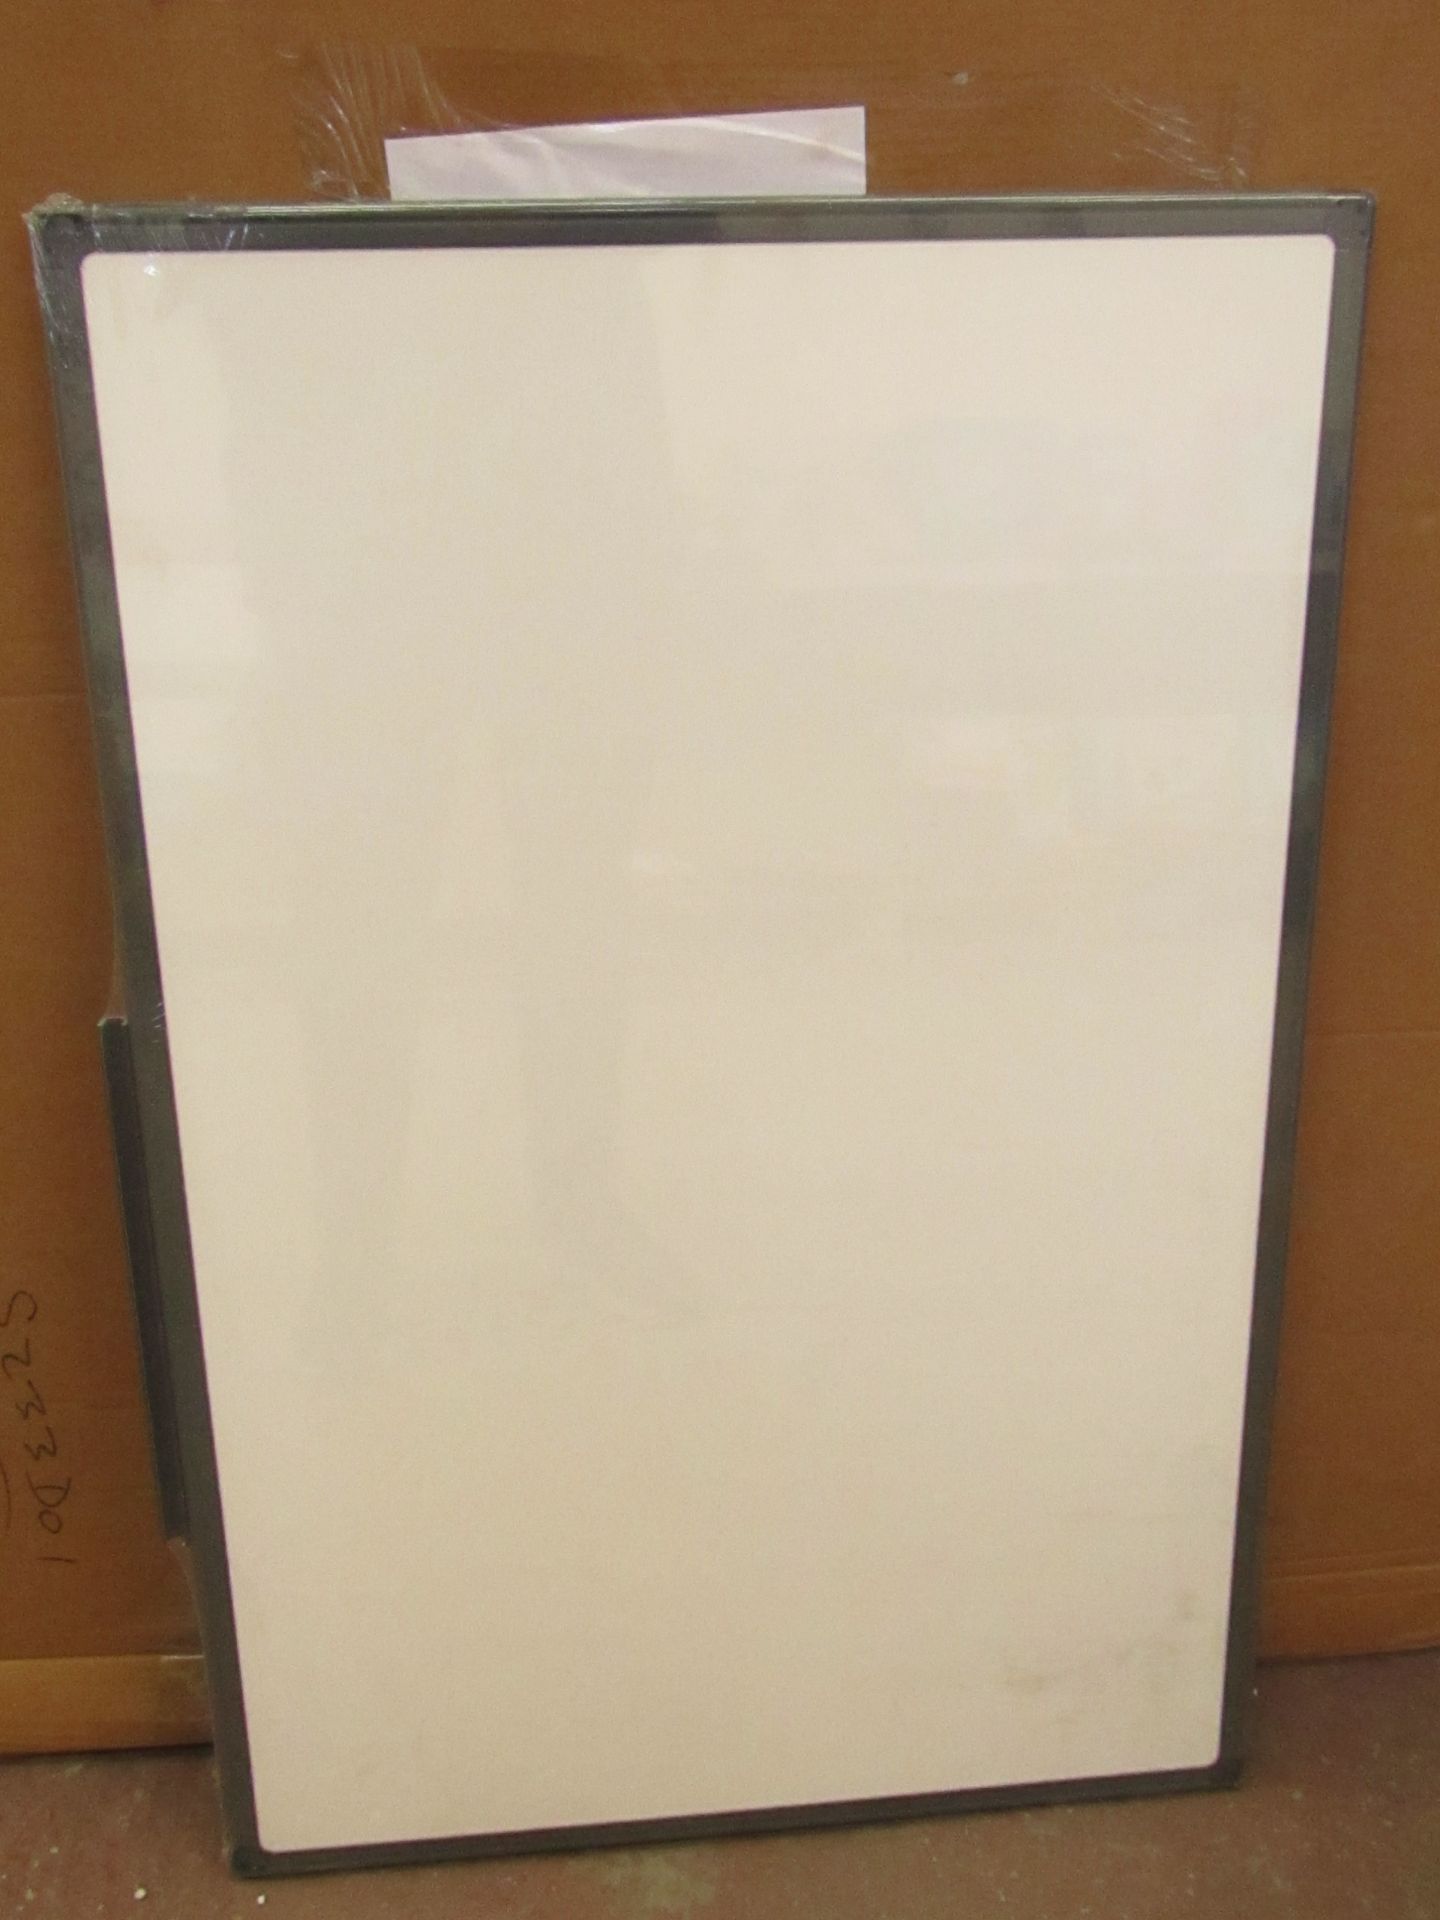 5 Star drywipe board with plastic frame, 1200 x 900 mm.